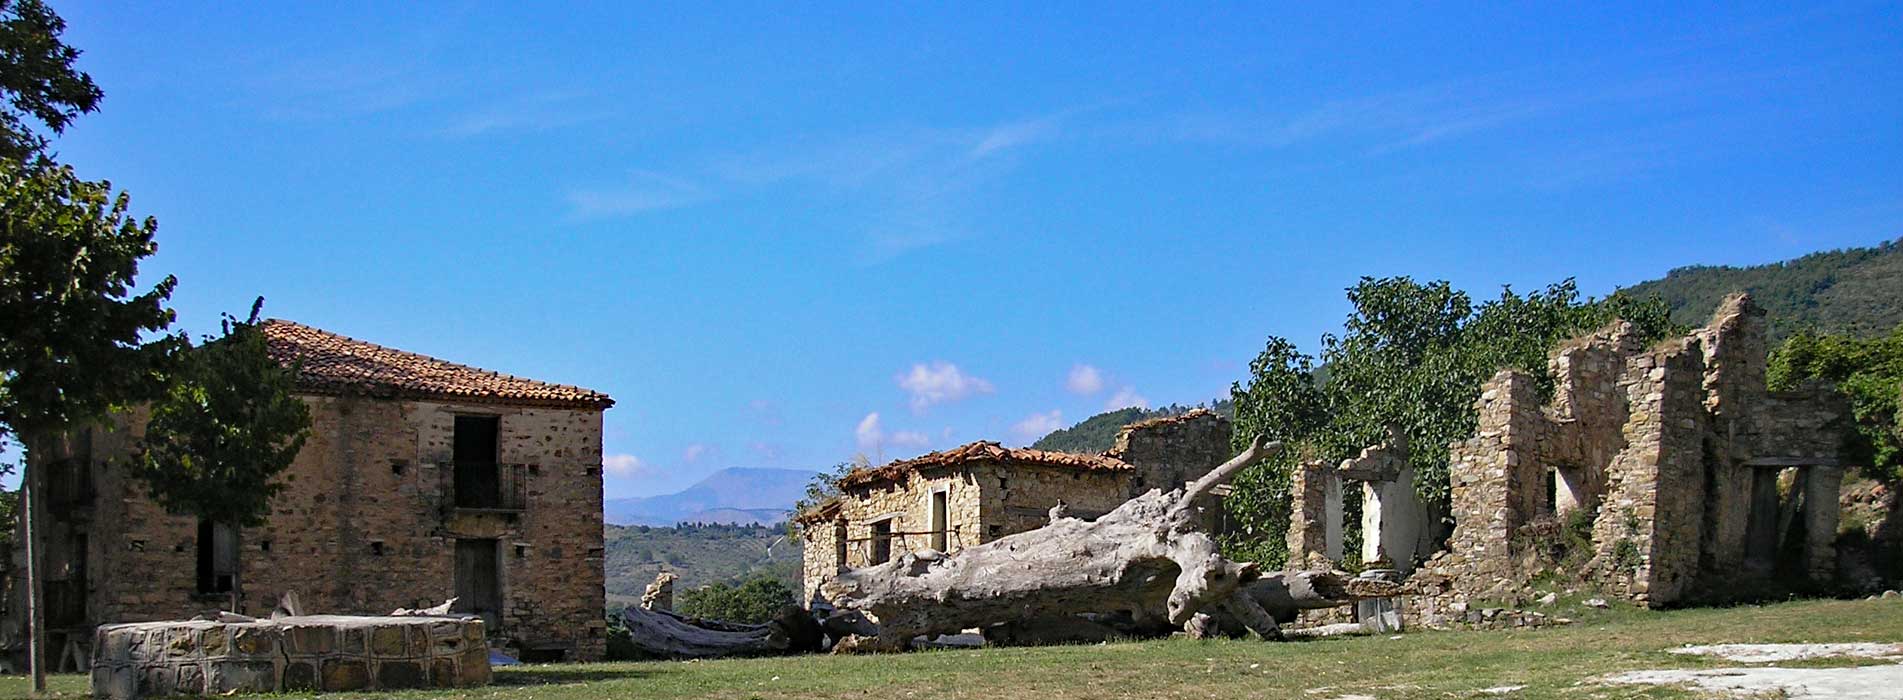 Freilichtmuseum im Cilento Nationalpark - Roscigno Vecchio